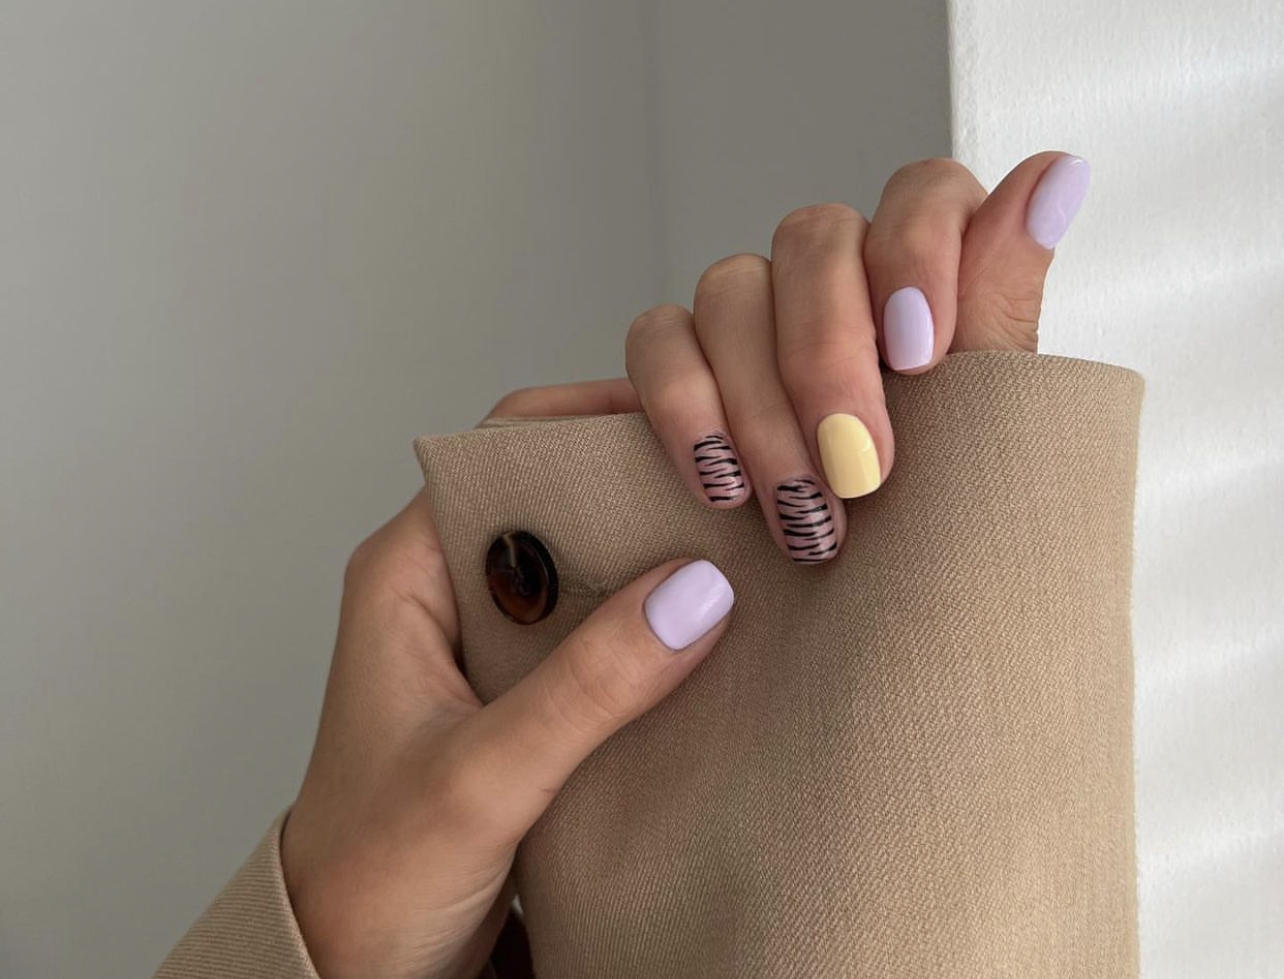 Biab Nails: Τι είναι αυτή η τάση στα νύχια που κυριαρχεί στο Instagram